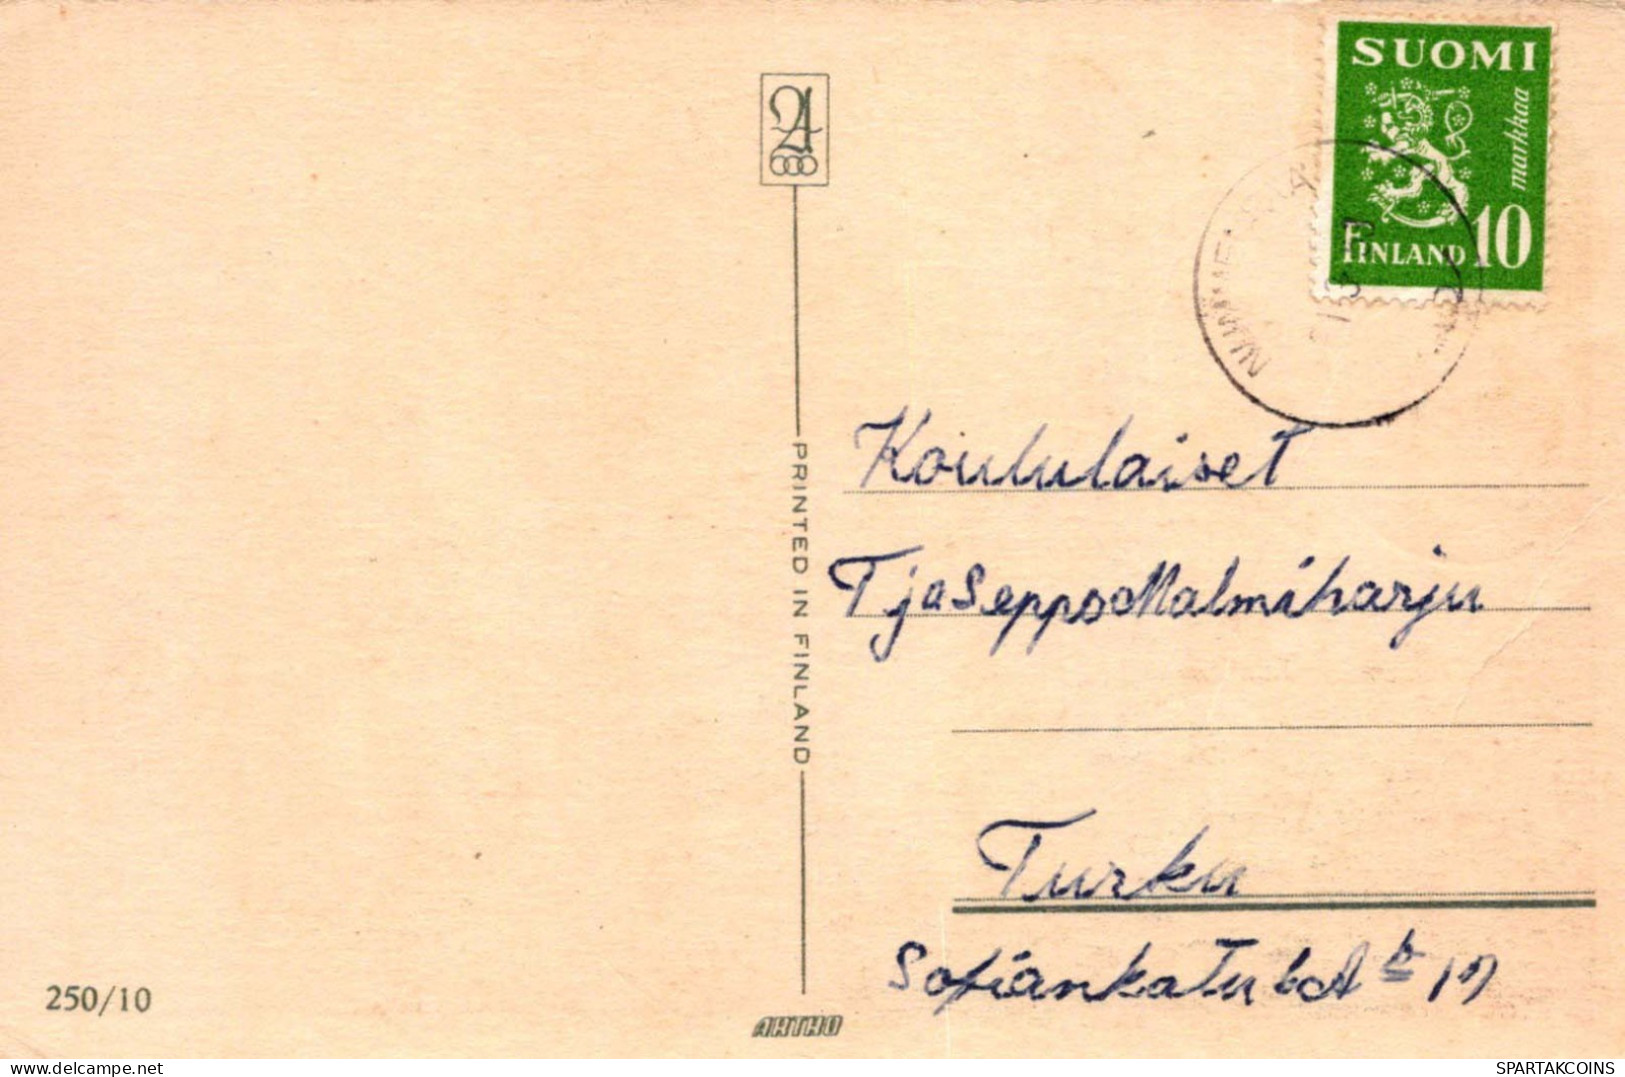 PASQUA BAMBINO UOVO Vintage Cartolina CPA #PKE233.A - Easter